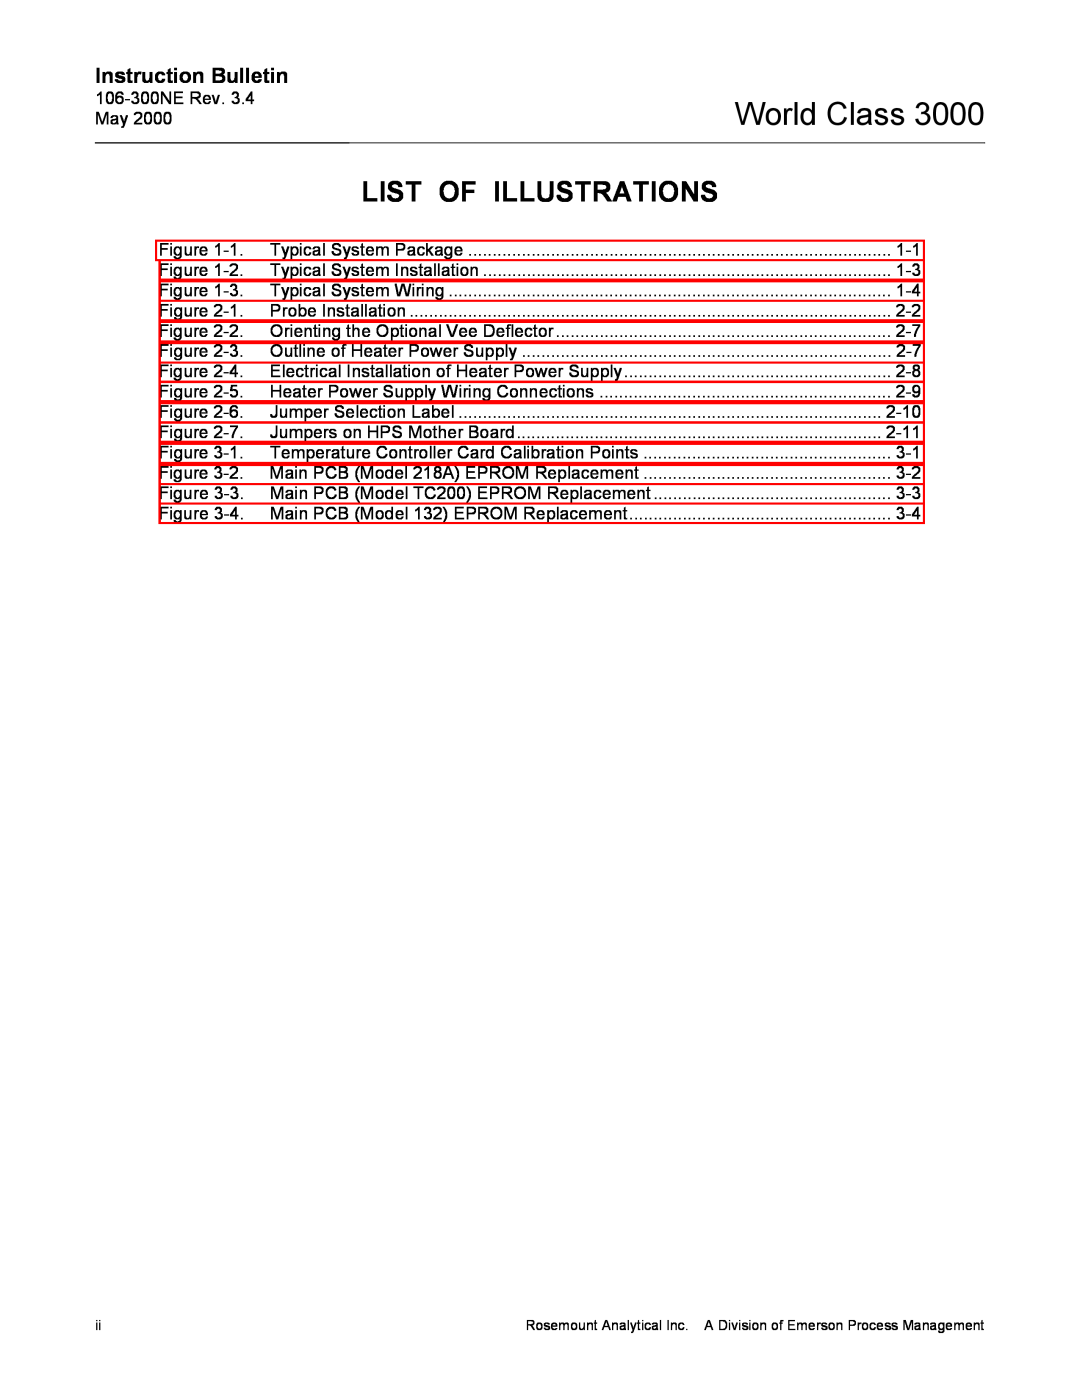 Emerson 3000 manual List Of Illustrations, Instruction Bulletin 